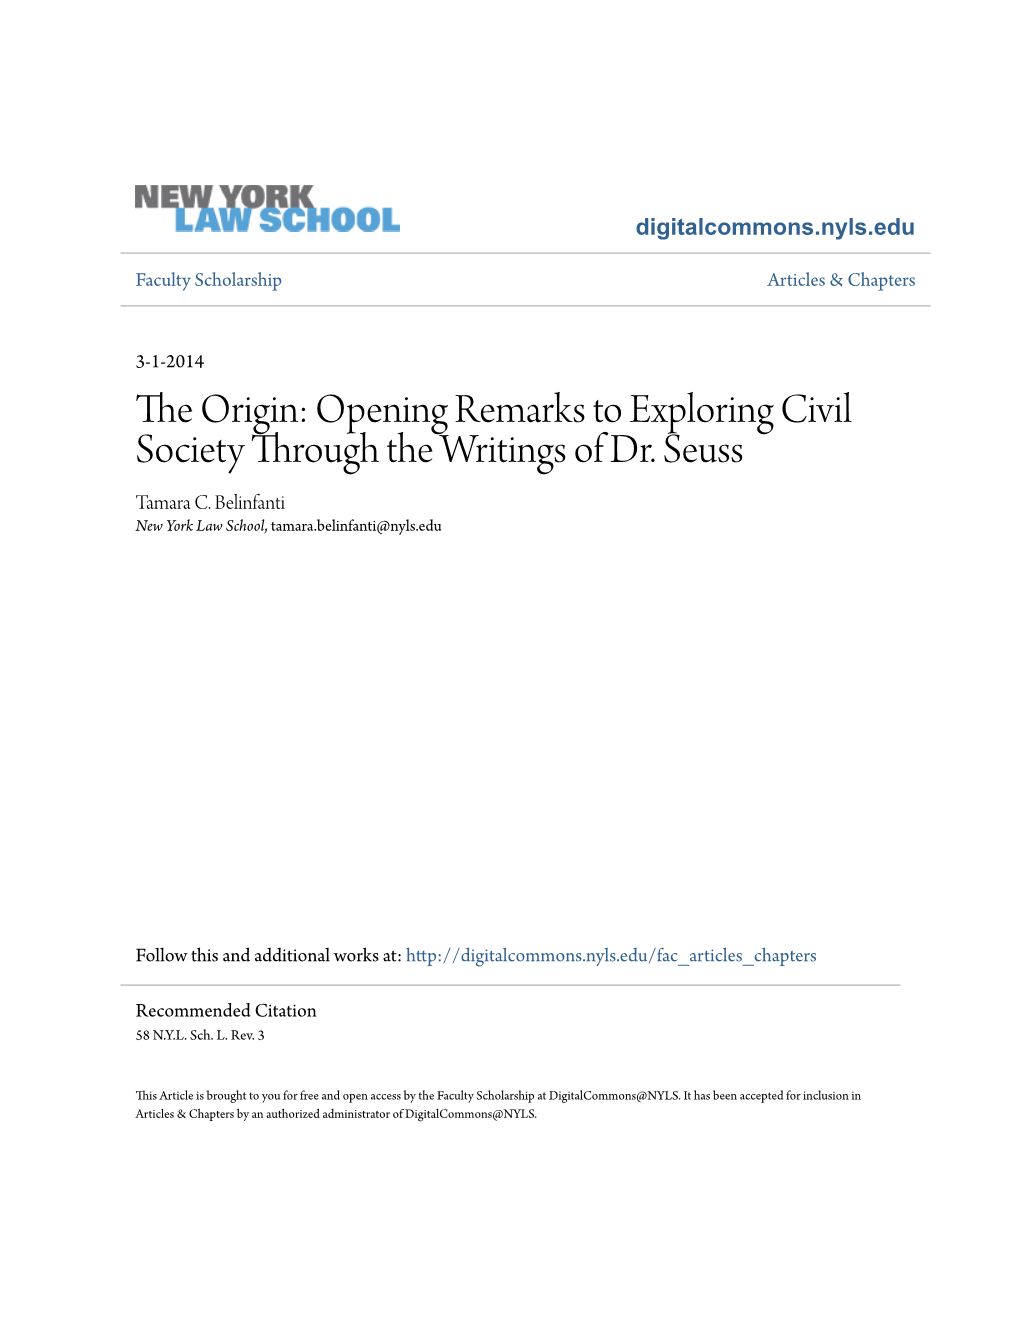 The Origin: Opening Remarks to Exploring Civil Society Through the Writings of Dr. Seuss Tamara C